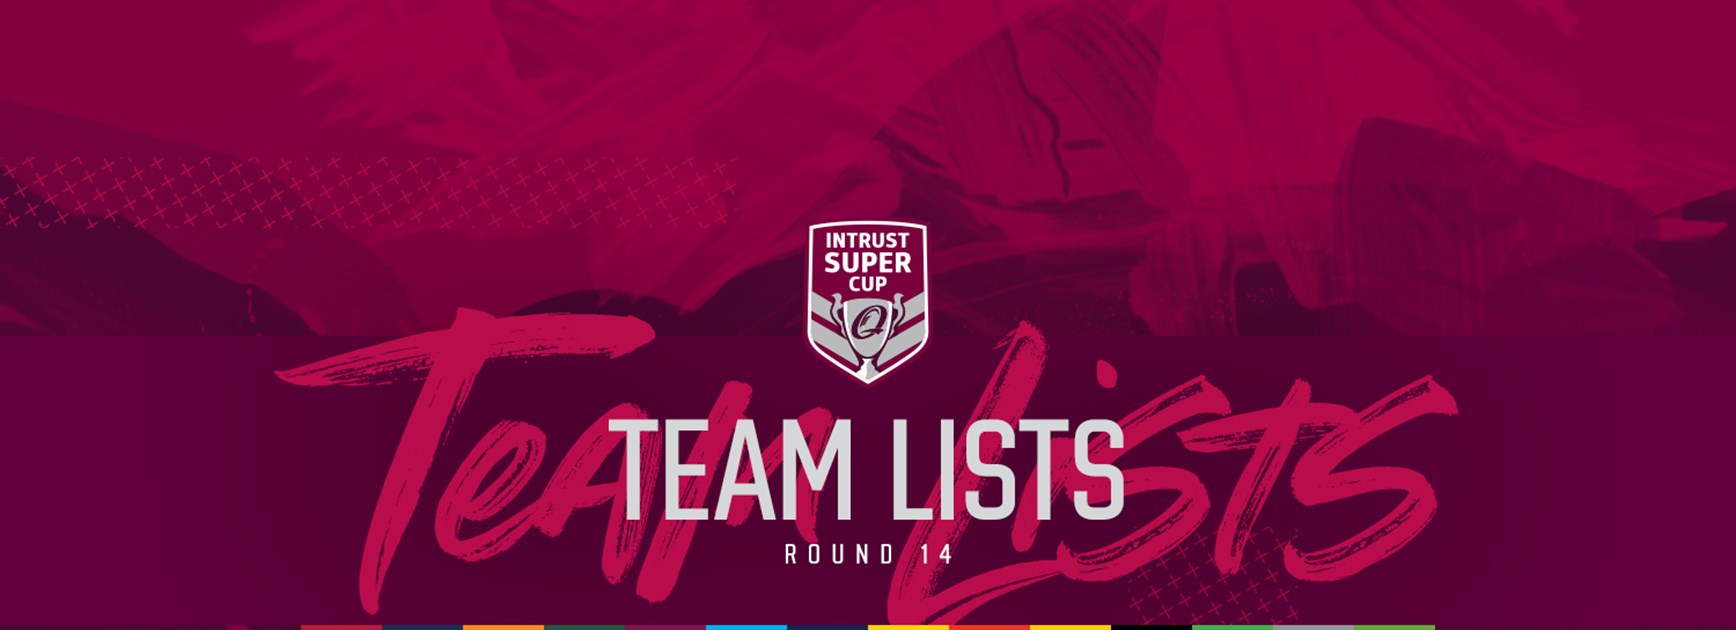 Intrust Super Cup Round 14 team lists